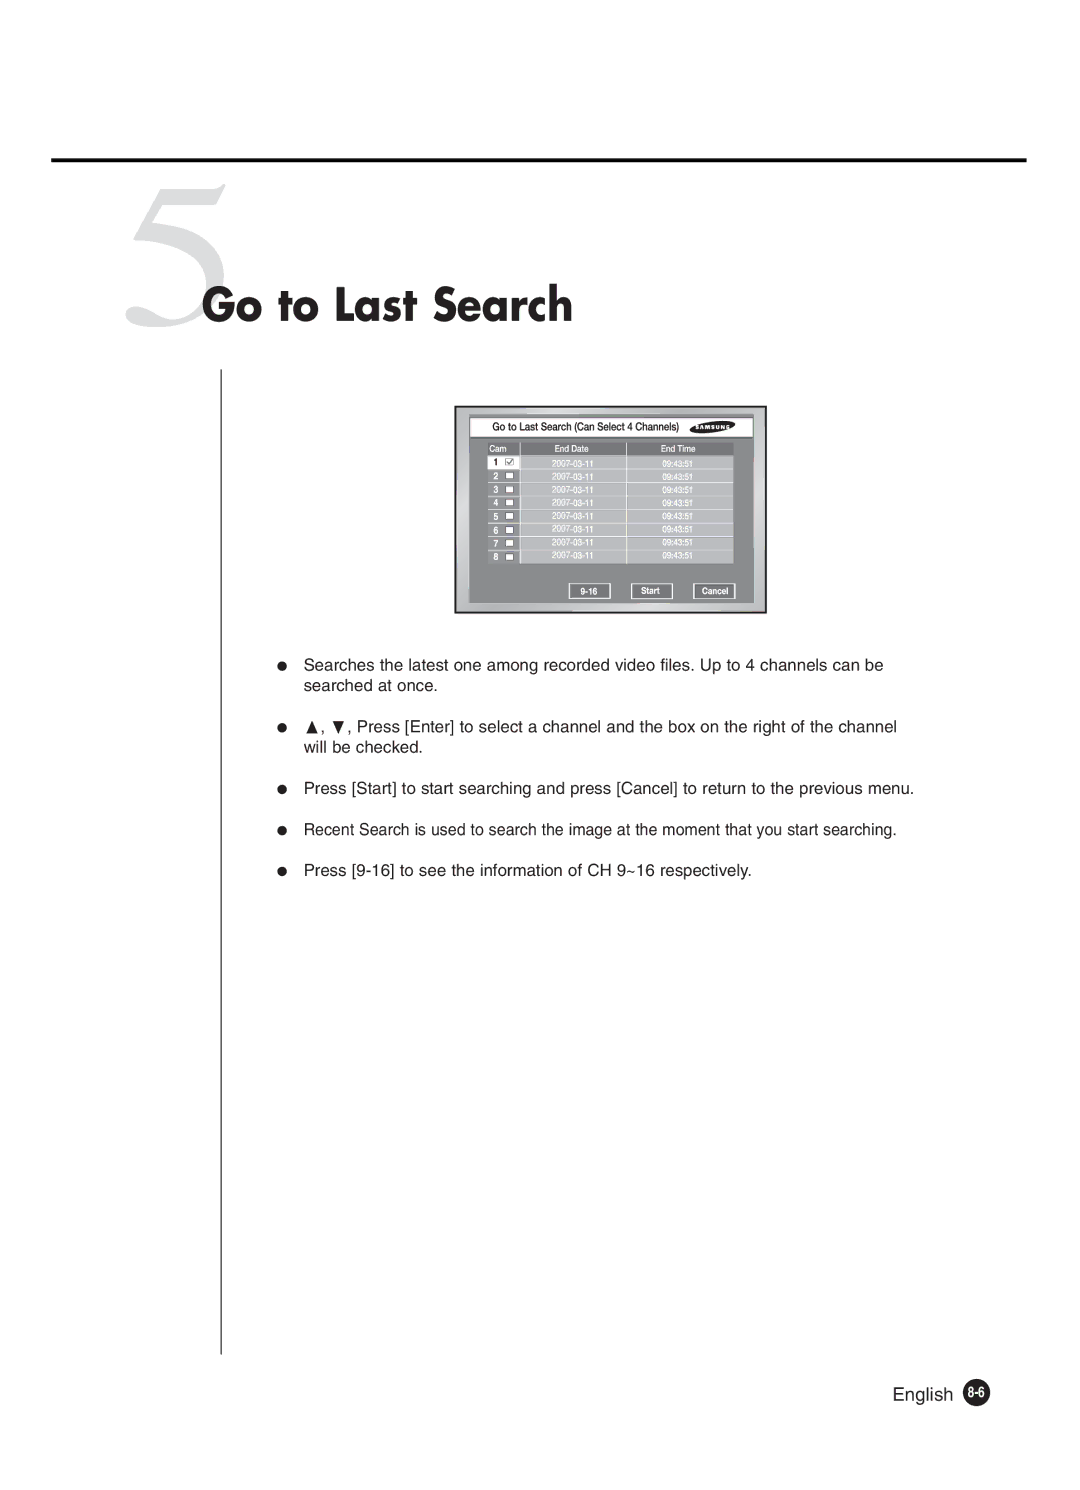 Samsung SHR-4160P manual 5Go to Last Search 